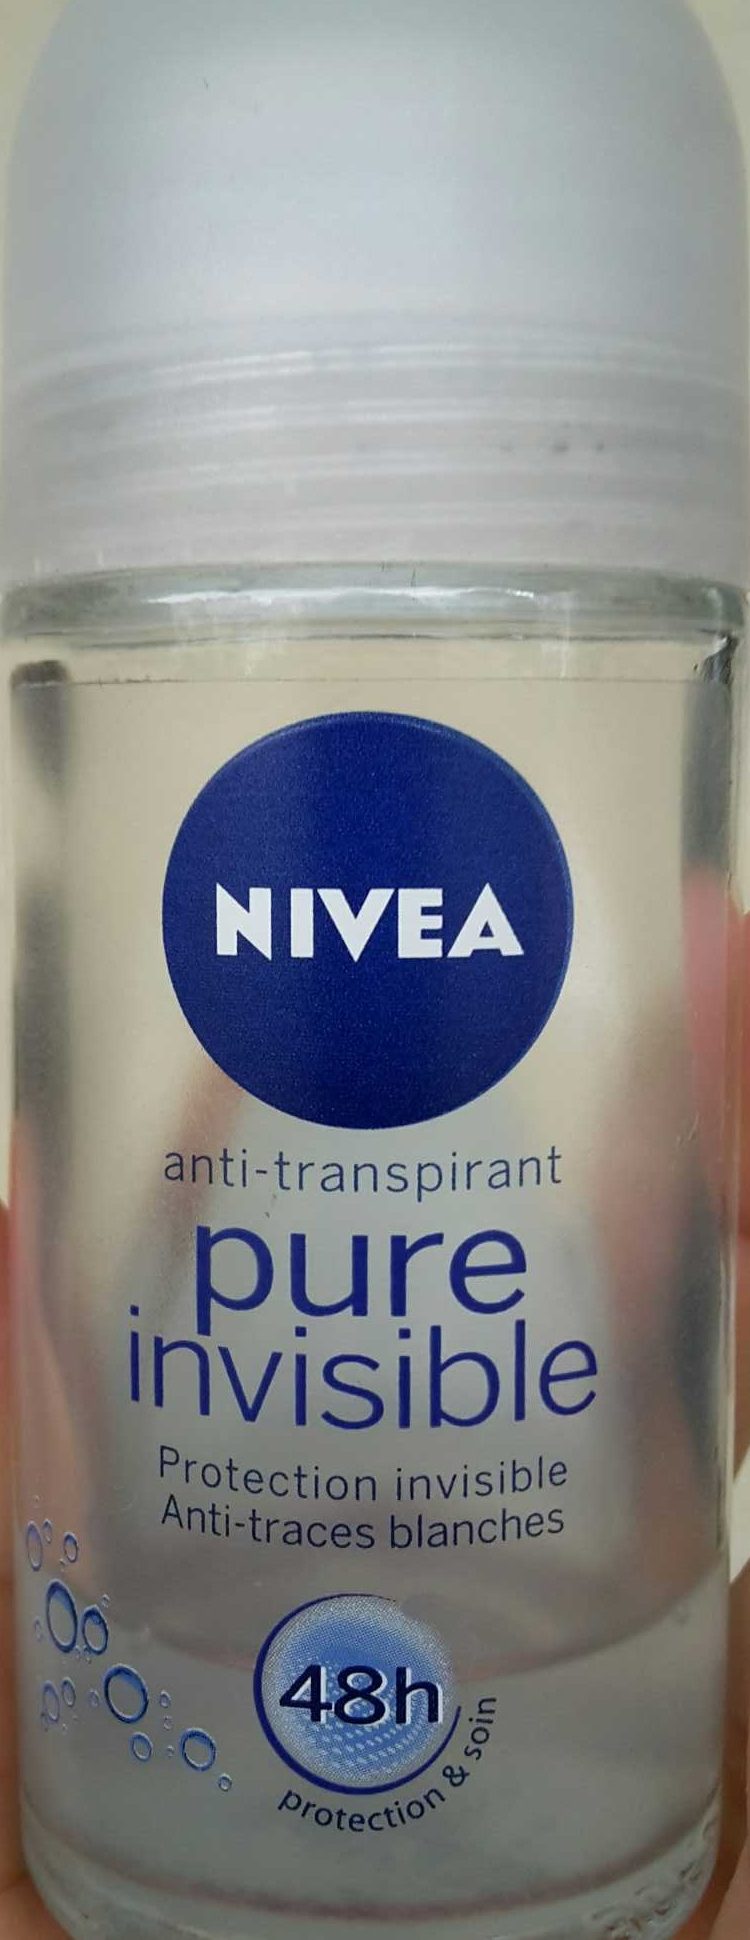 Anti-transpirant pure invisible - Product - en